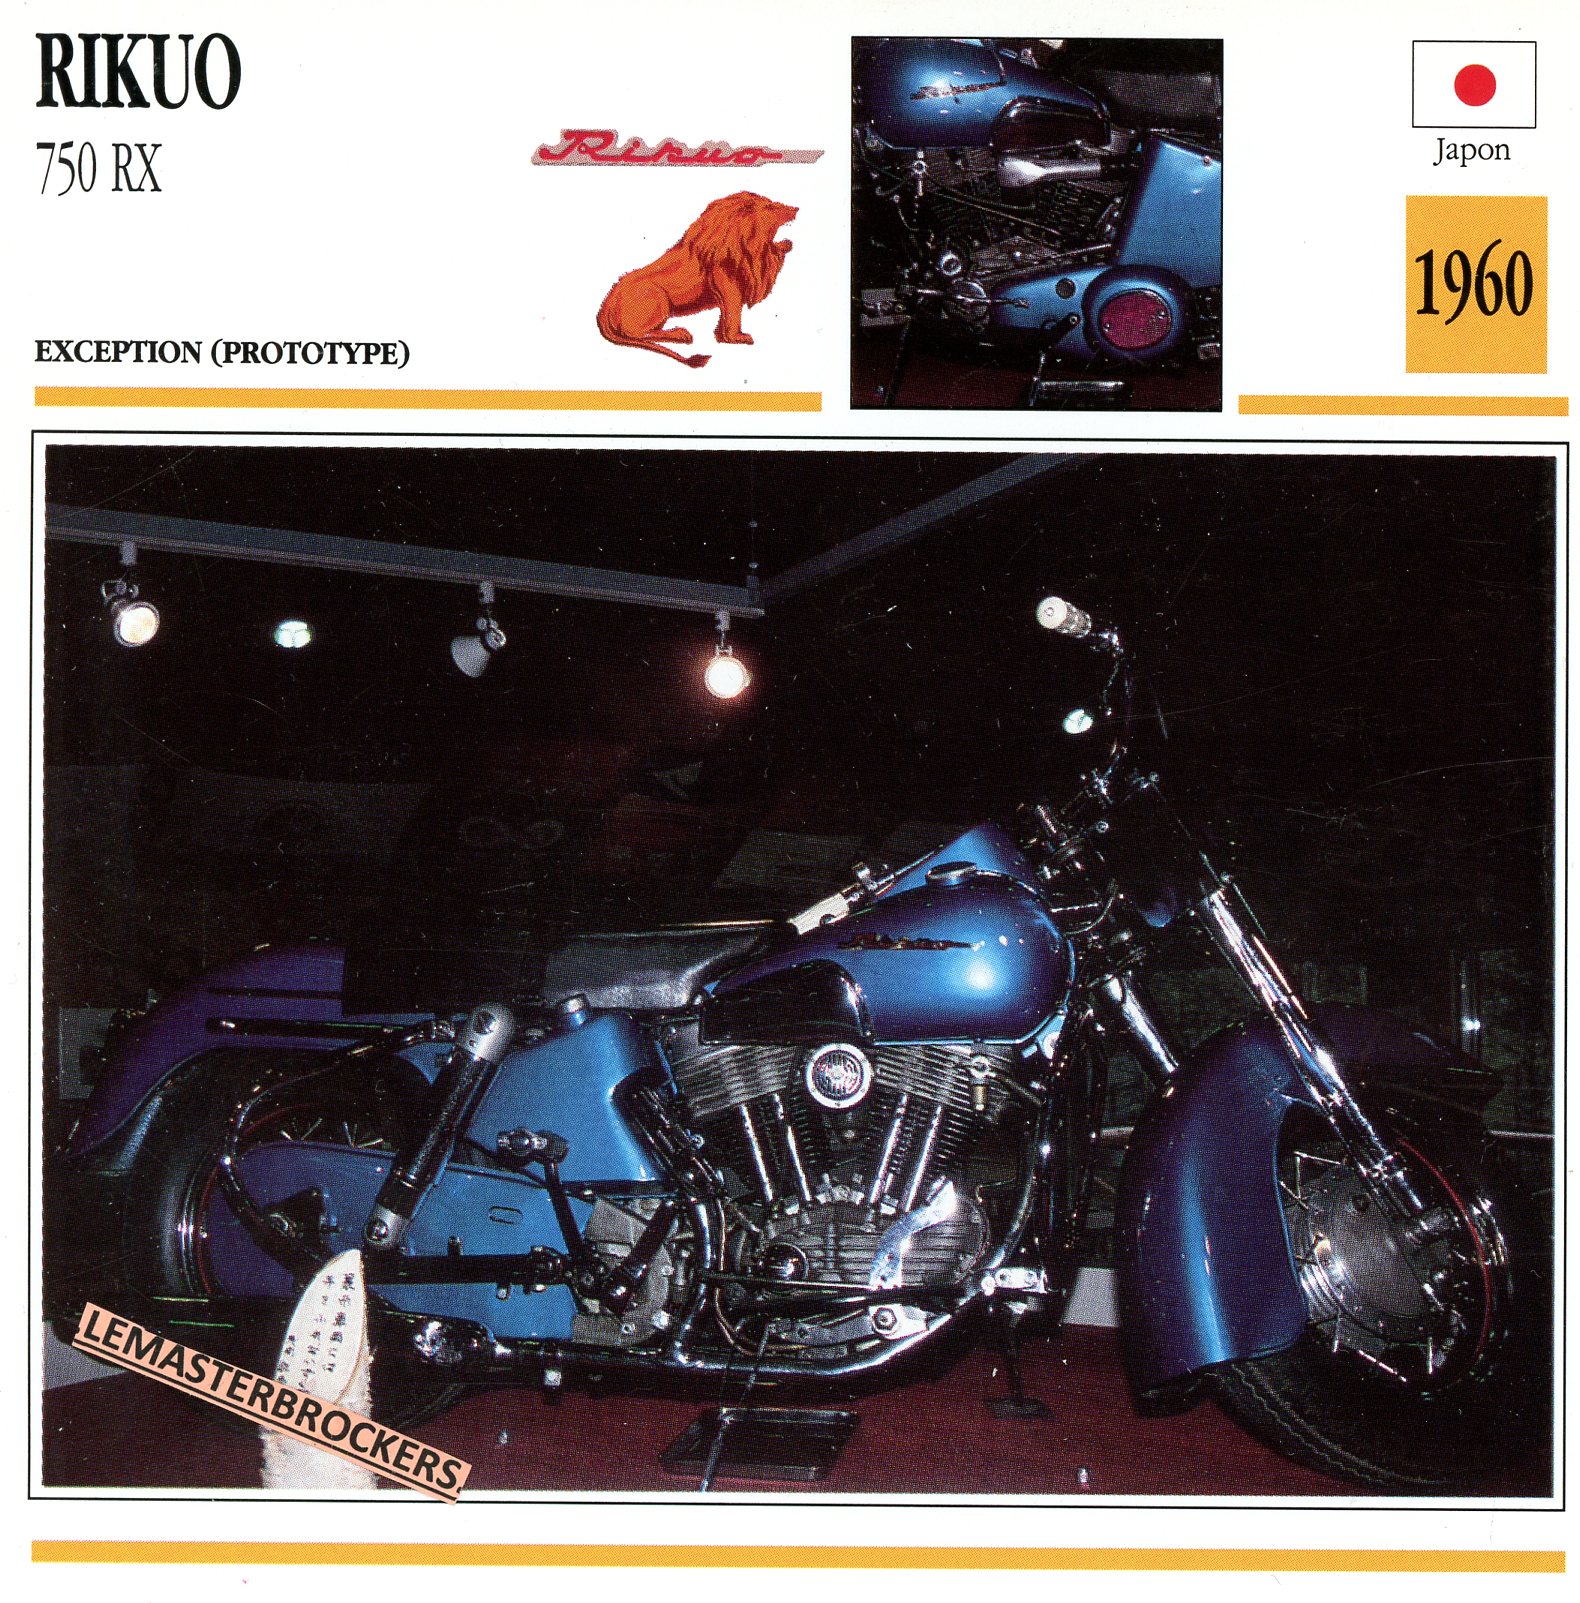 RIKUO-750RX-1960-FICHE-MOTO-ATLAS-lemasterbrockers-CARD-MOTORCYCLE